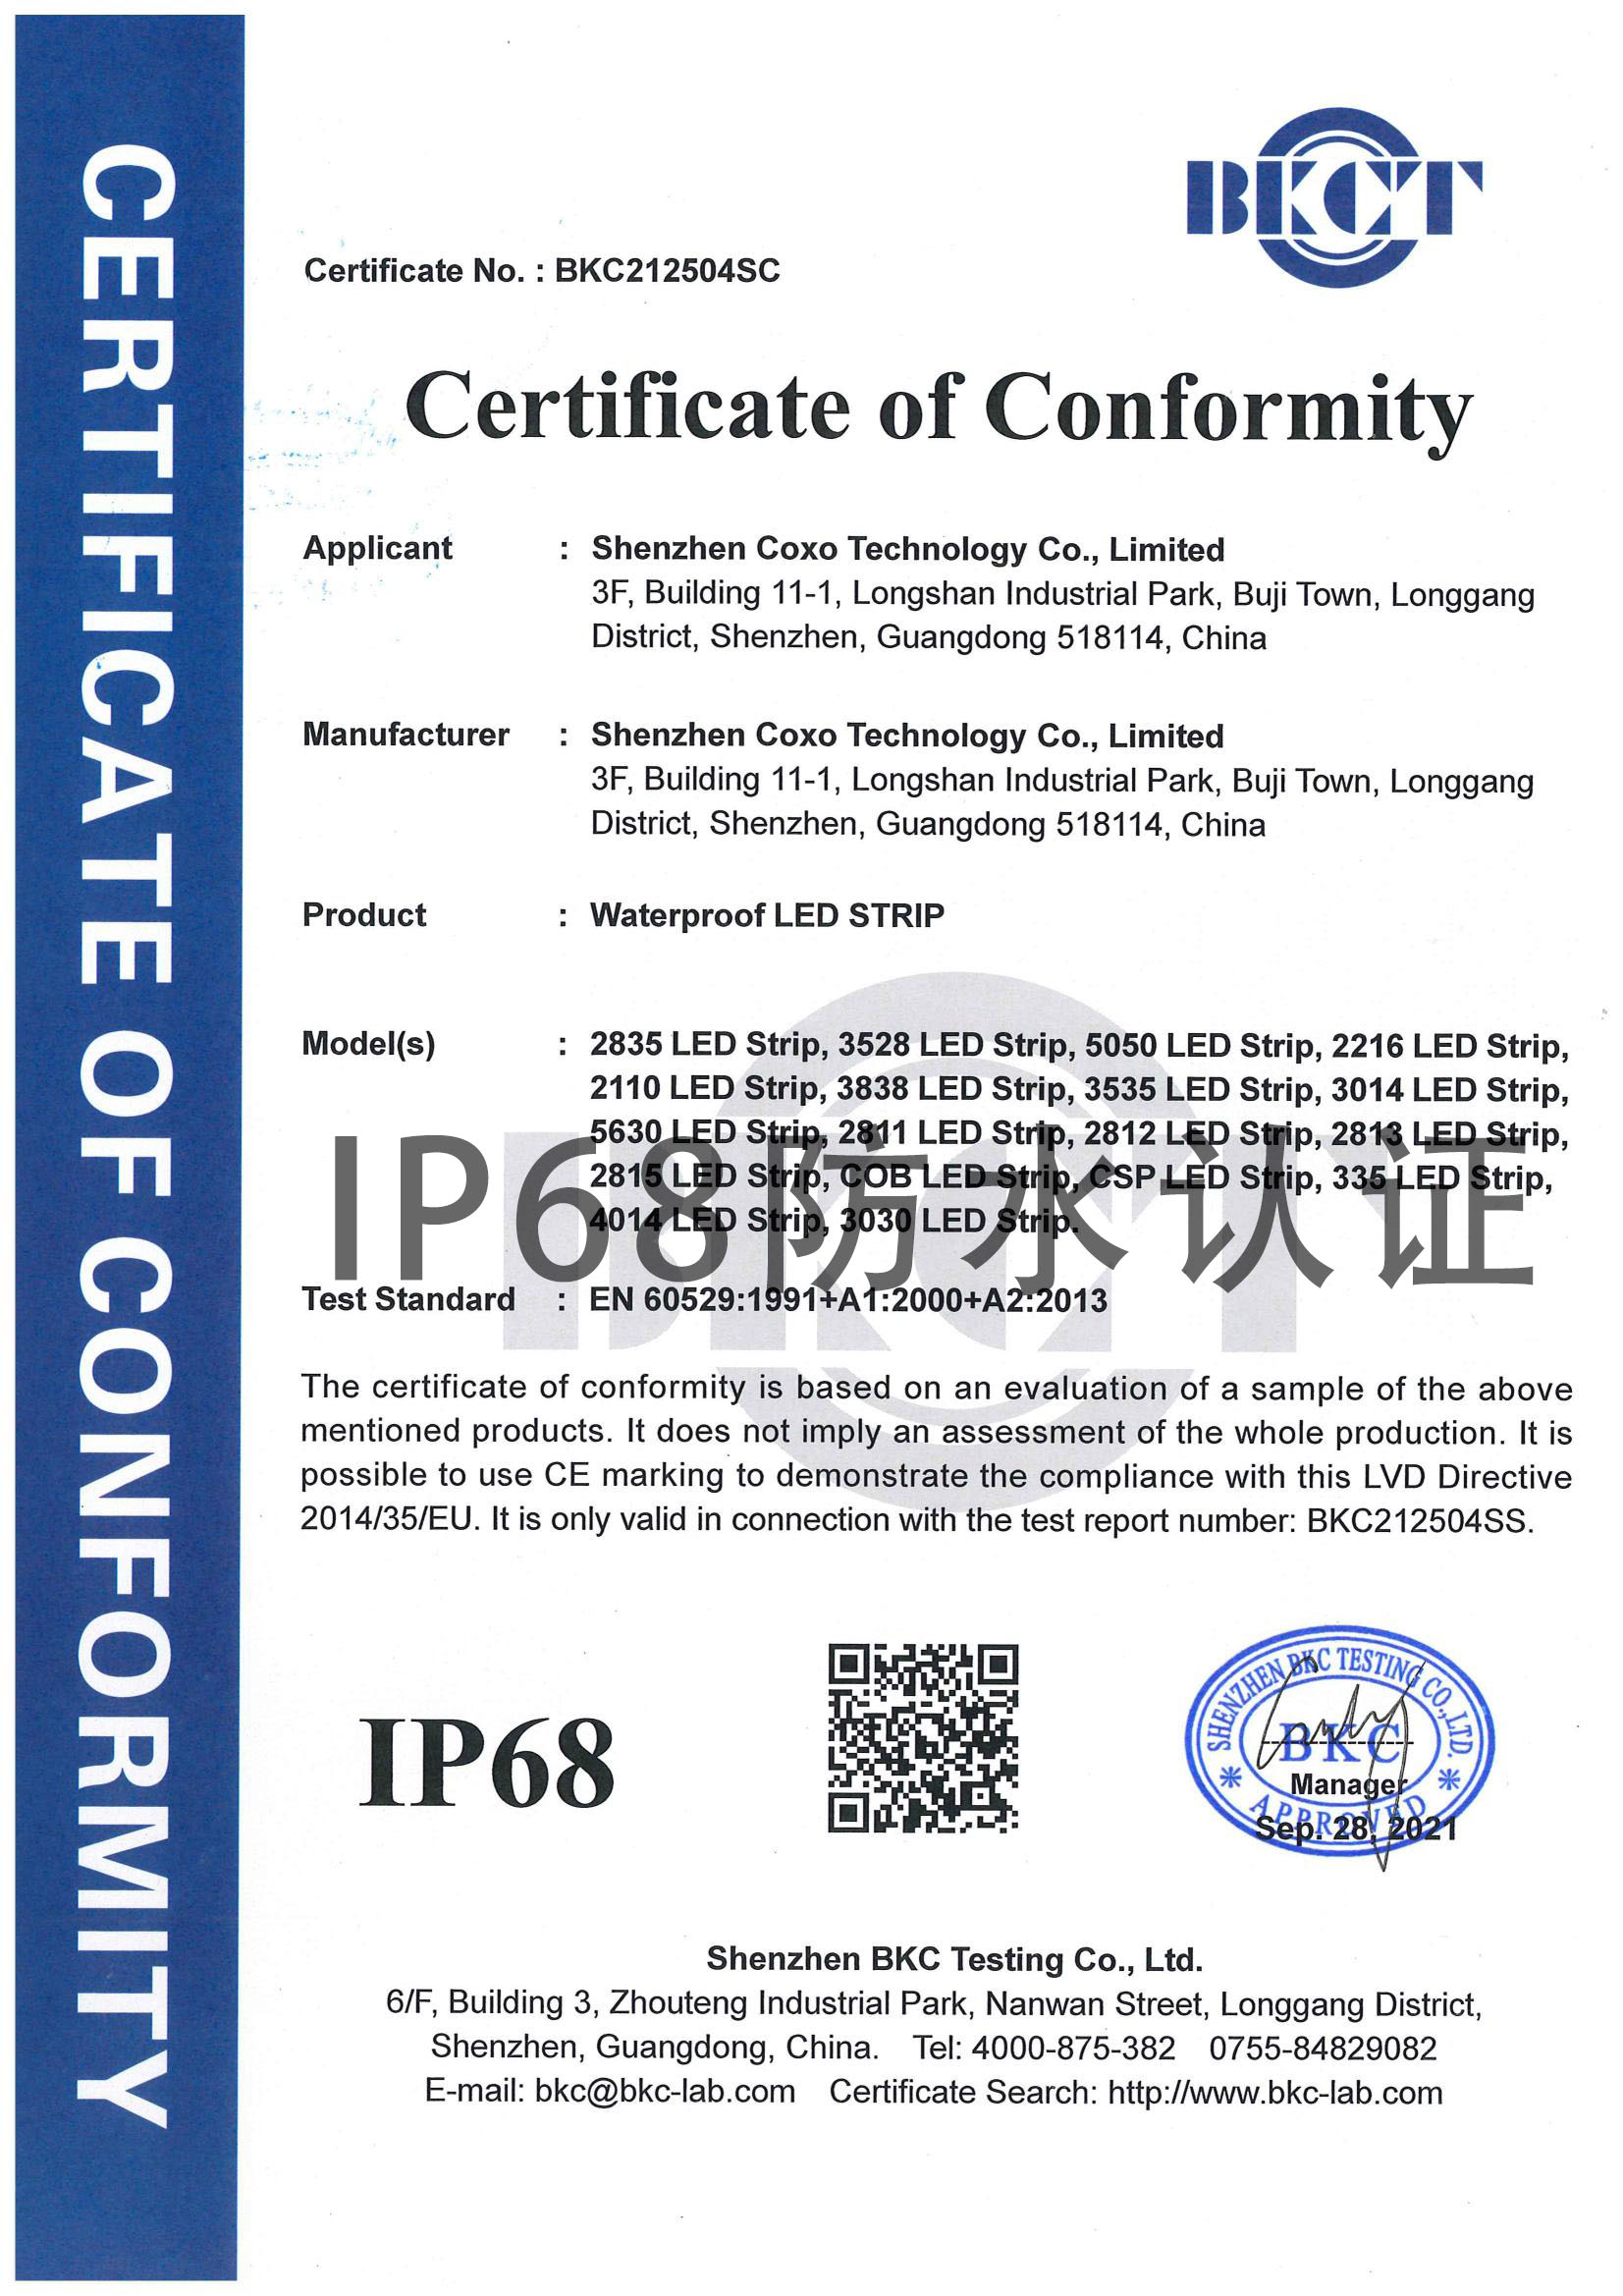 IP68防水認證